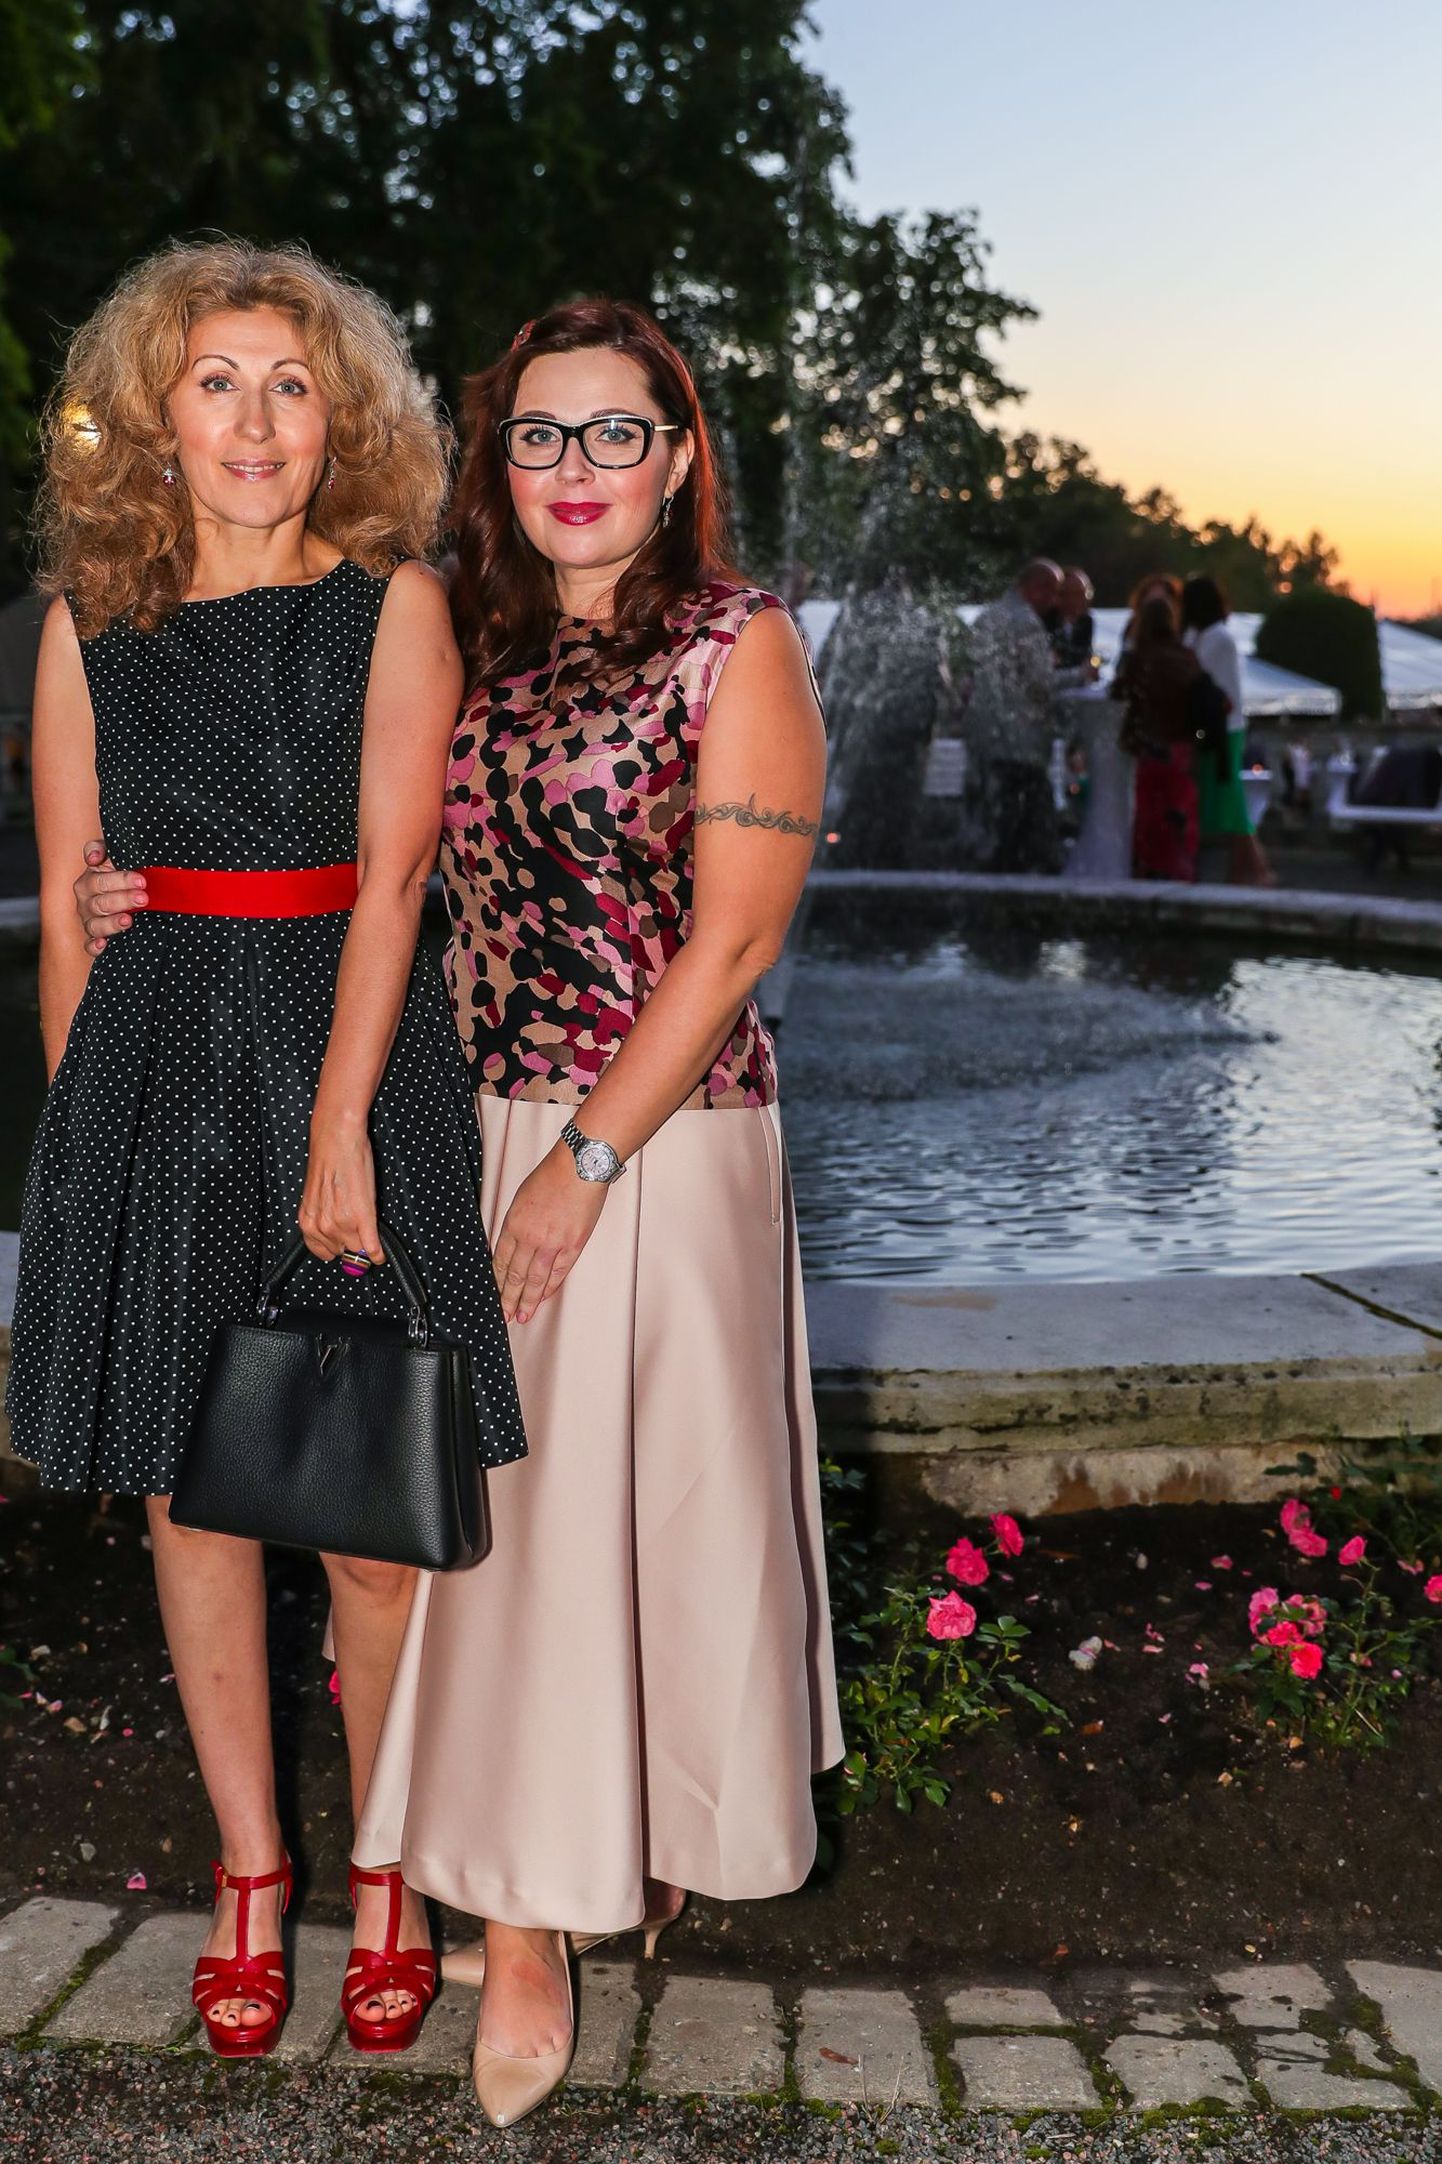 Presidendi roosiaia öökontsert
Presidendiproua soengu eest kandis hoolt Tamara Korjagina, meigi tegi Katrin Sangla